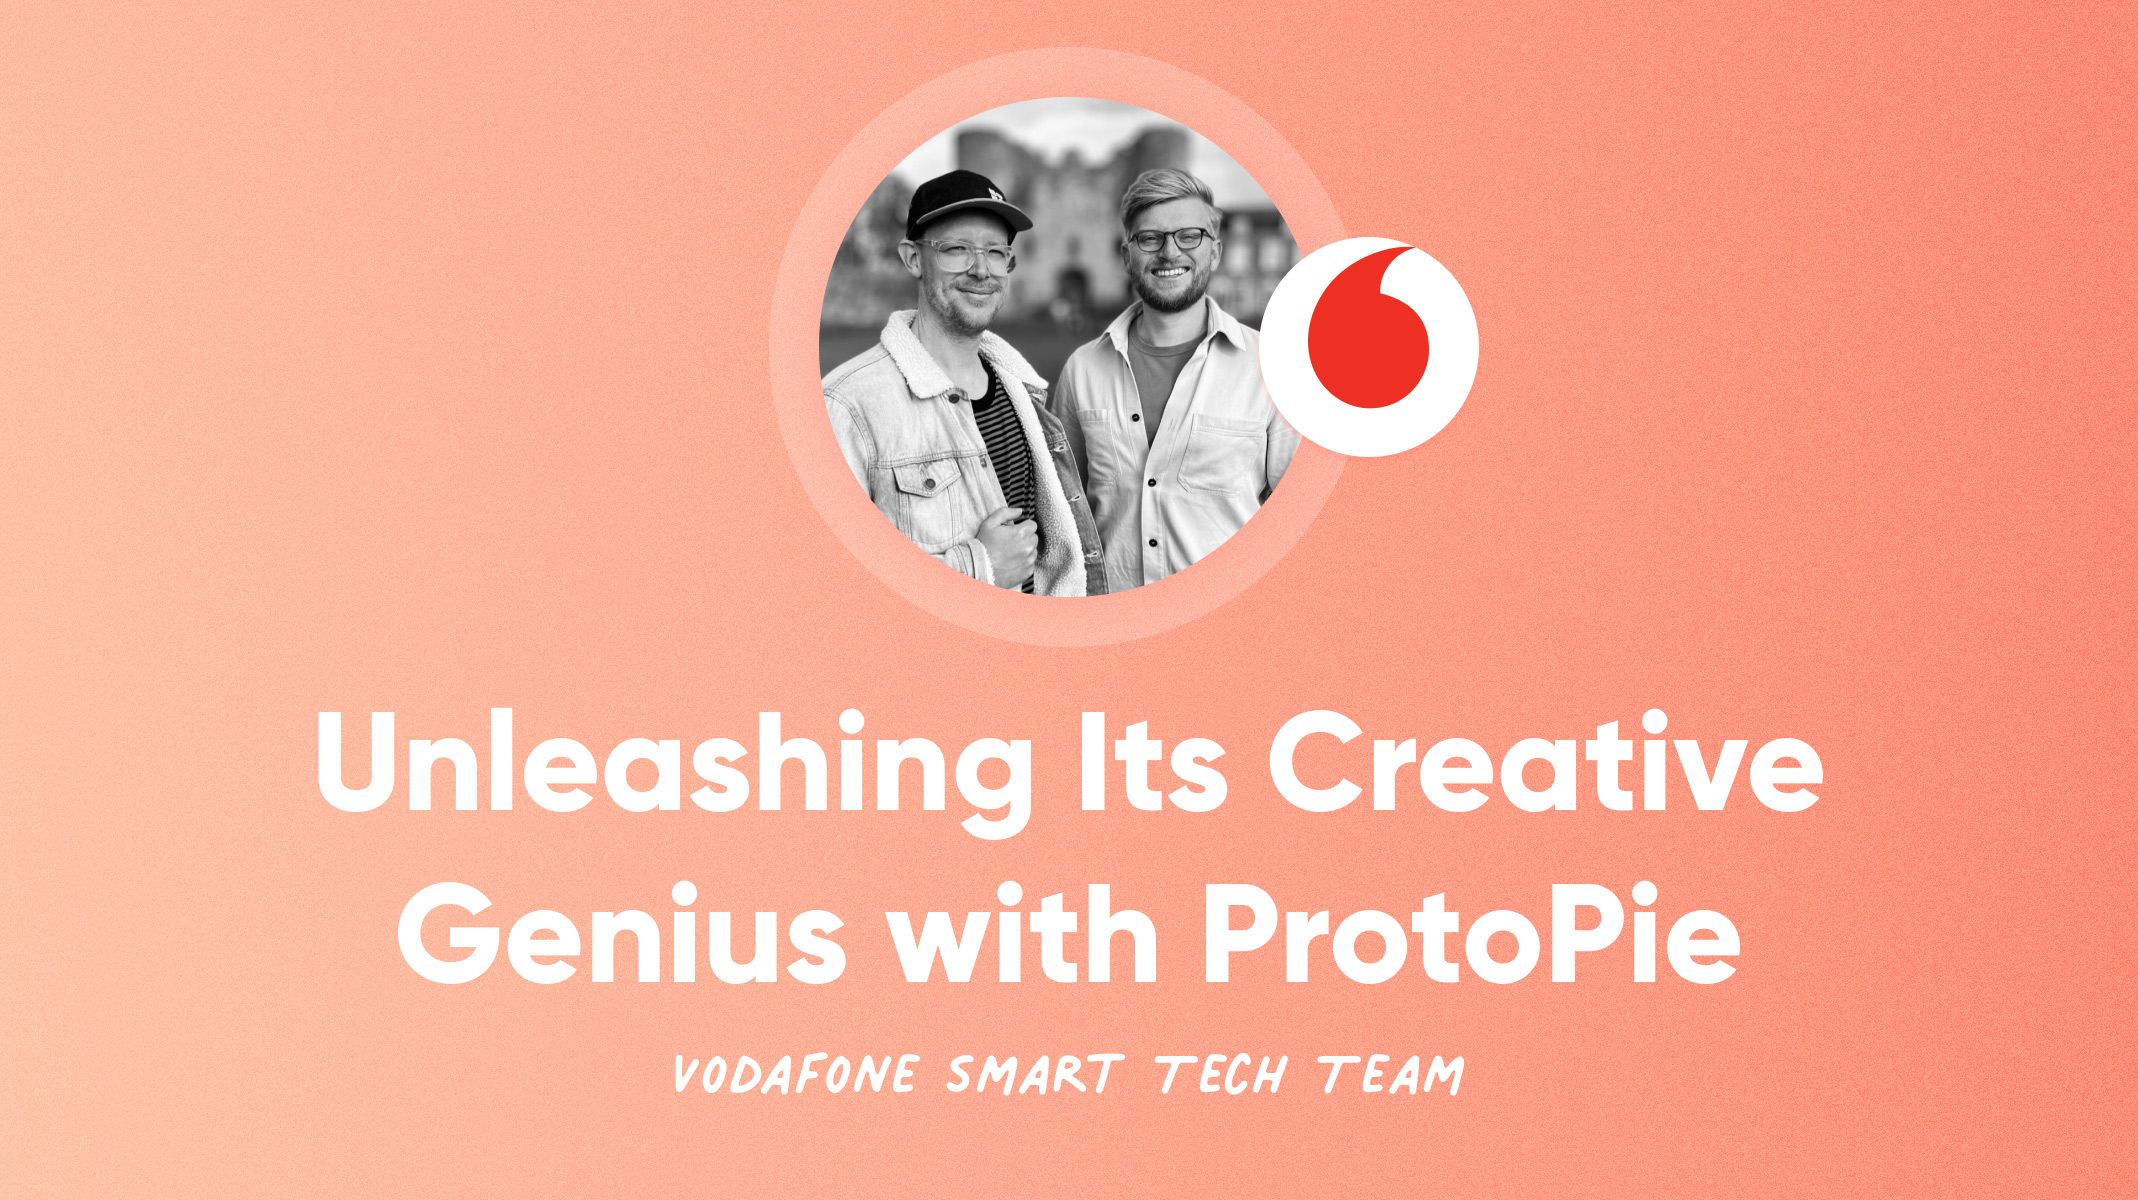 vodafone smart tech team thumbnail